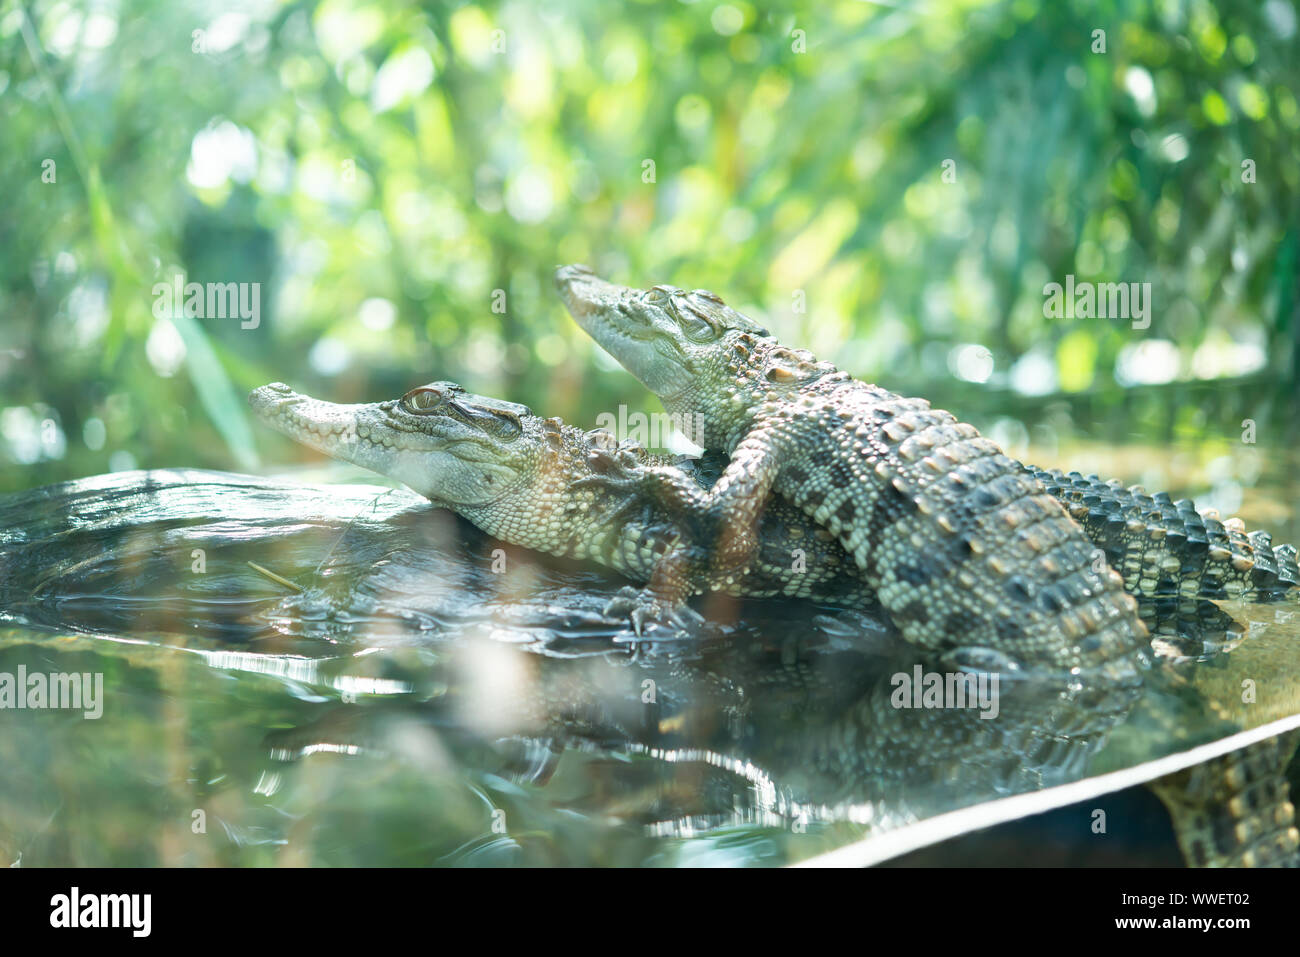 baby crocodiles in a tank Stock Photo